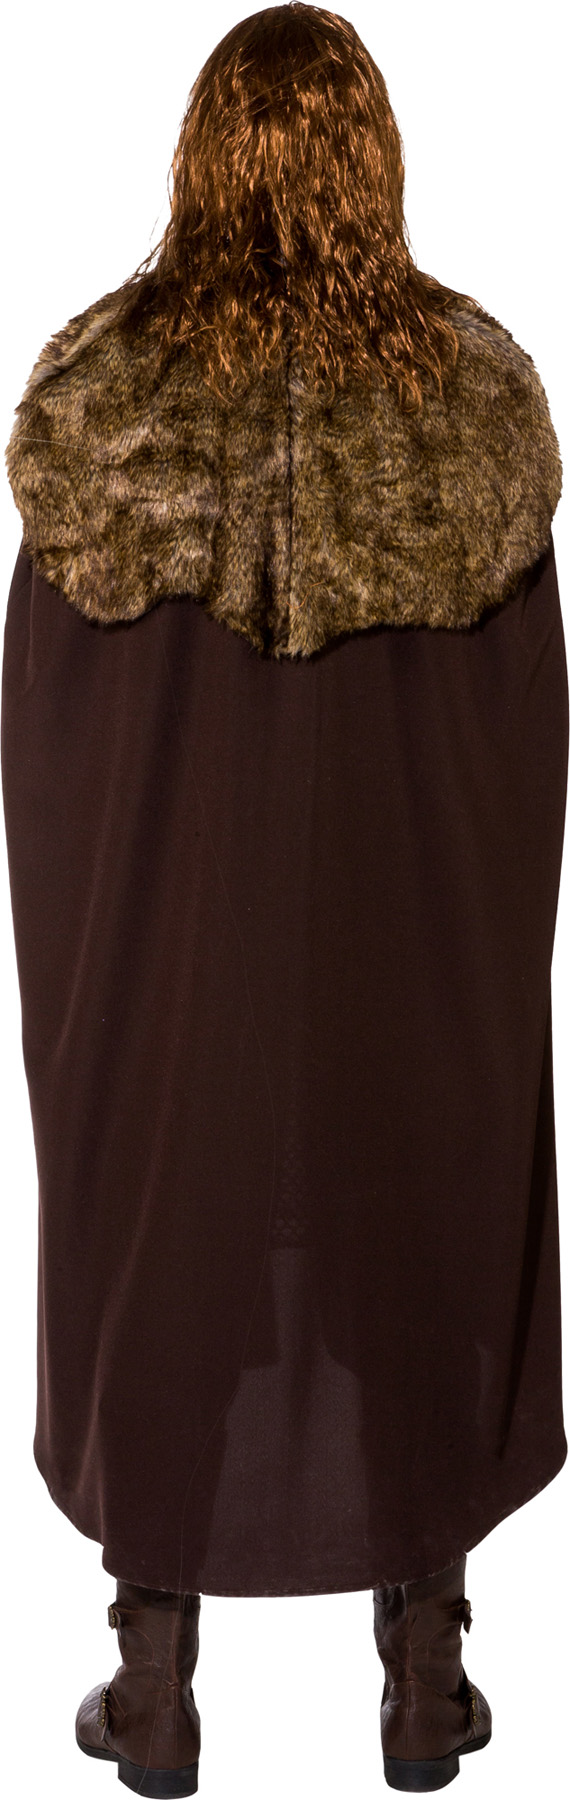 Brown cloak with fur trim